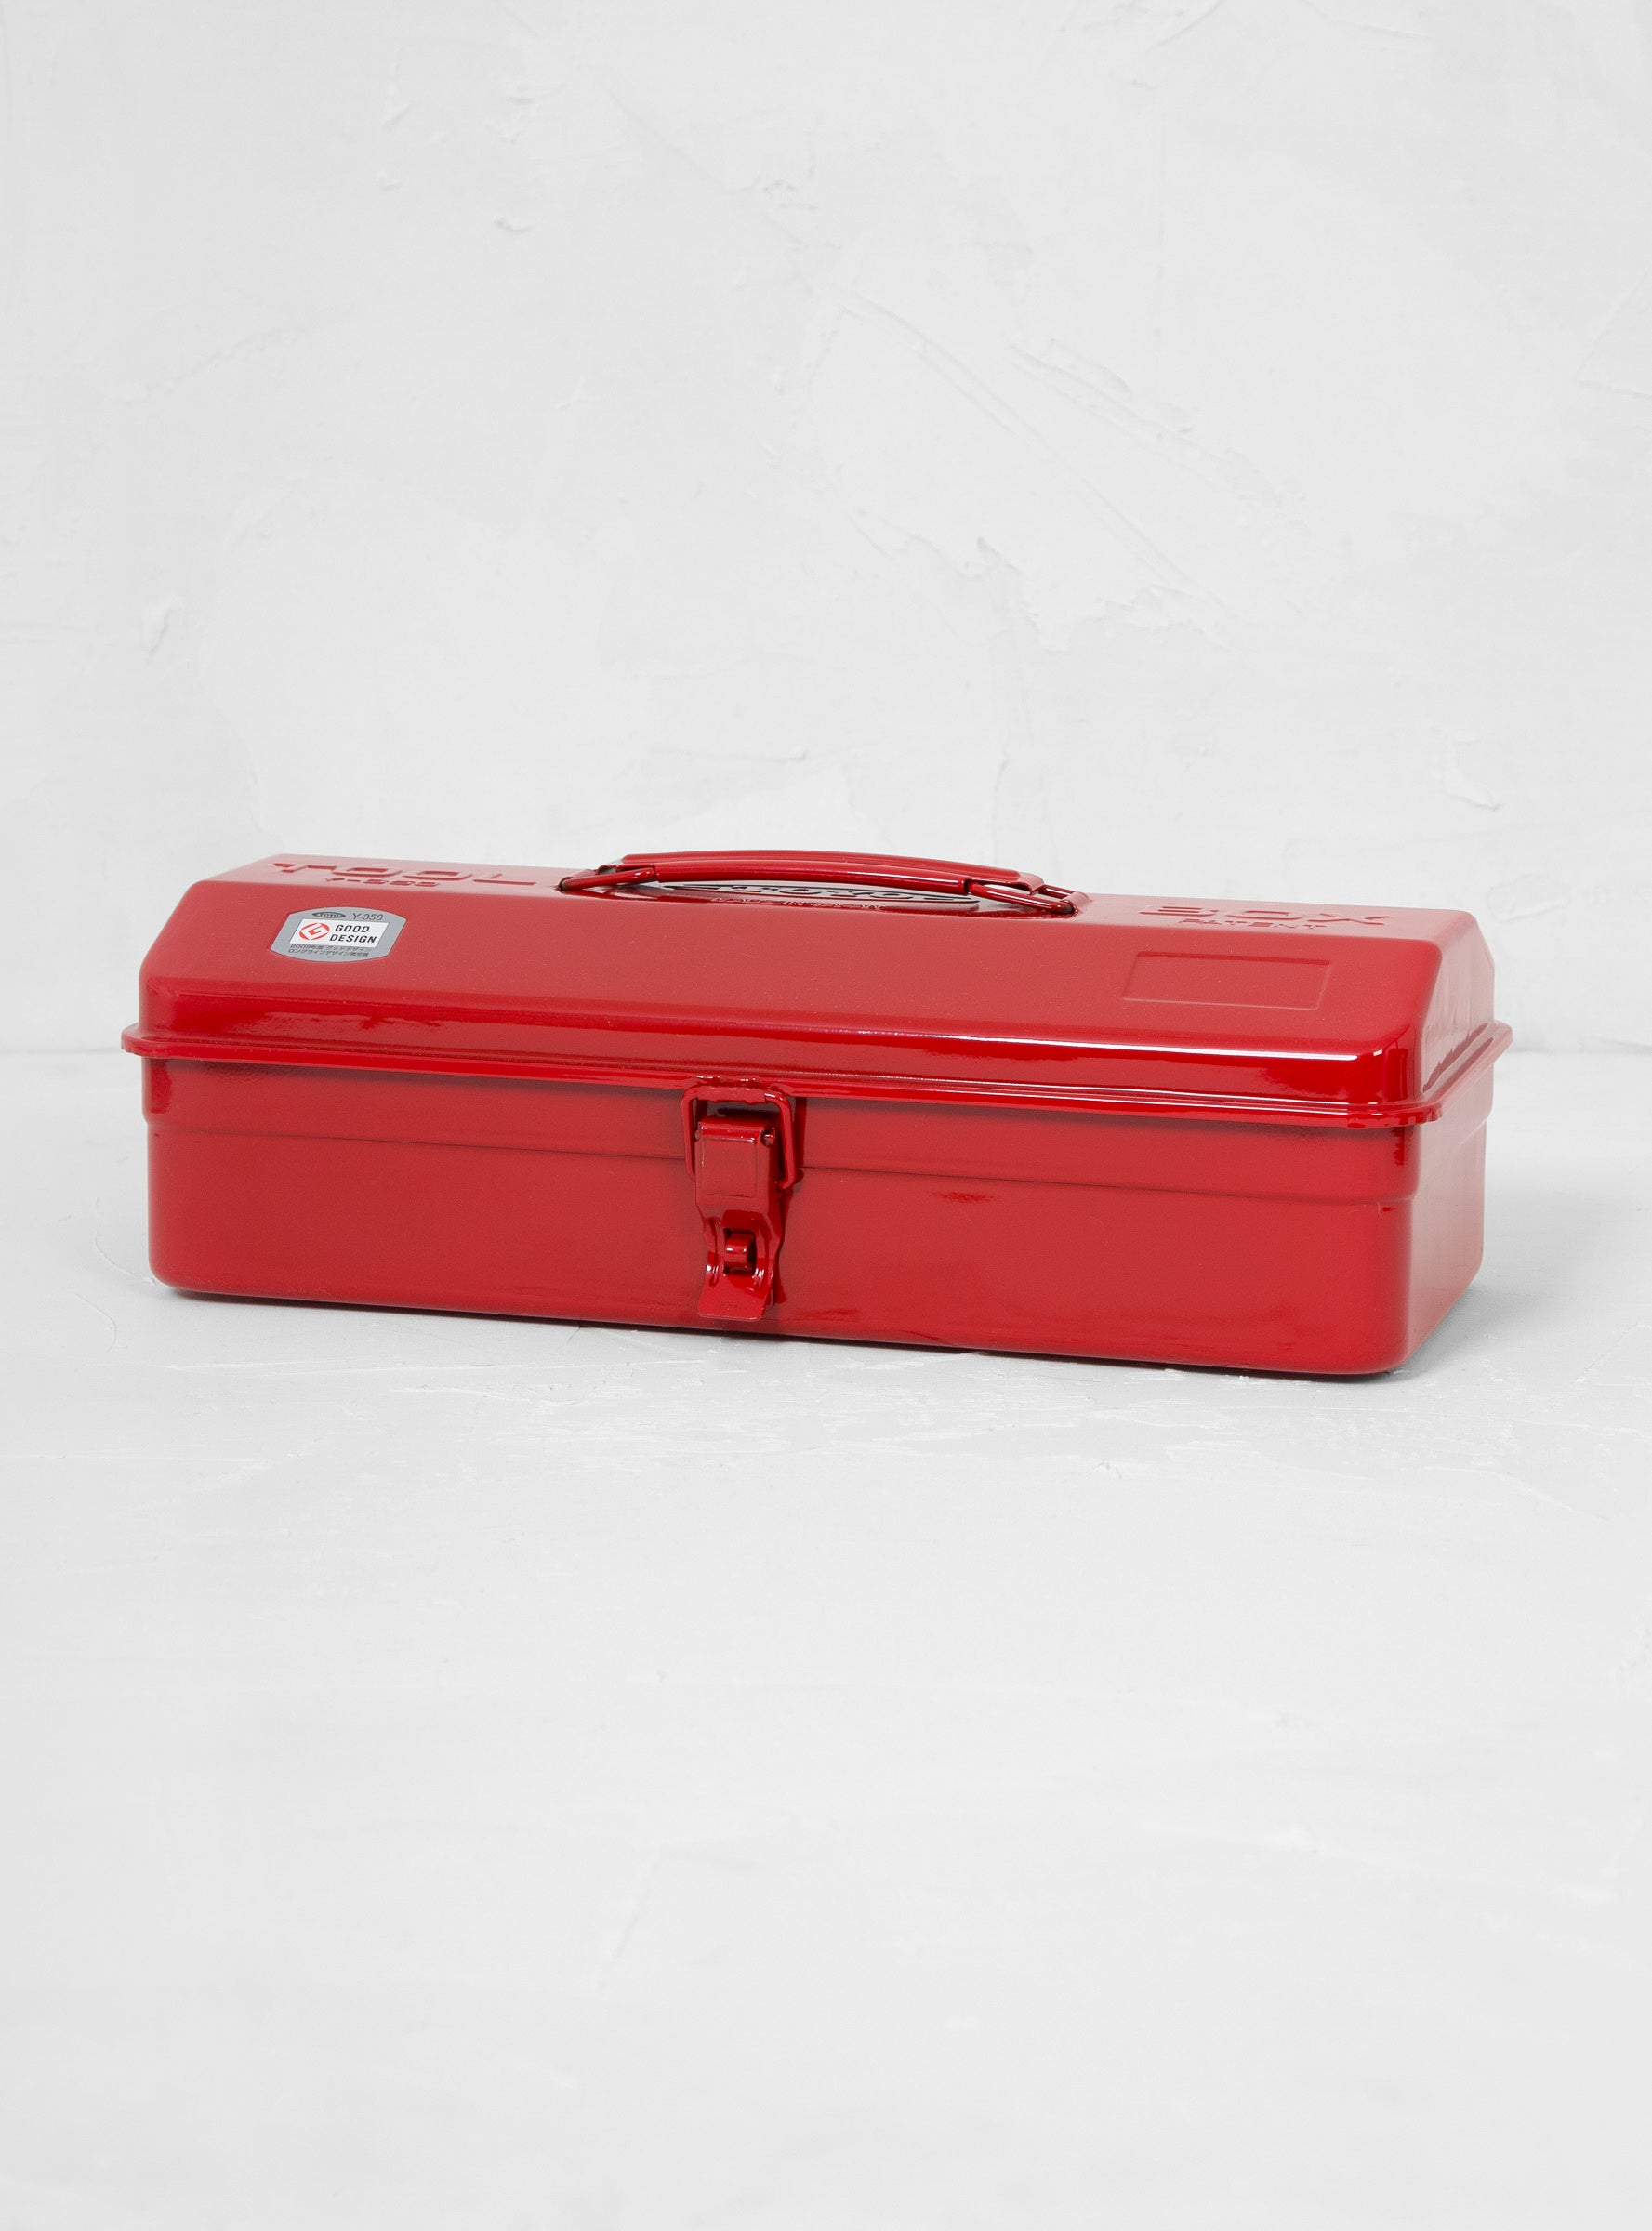 Y-350 Steel Tool Box Red